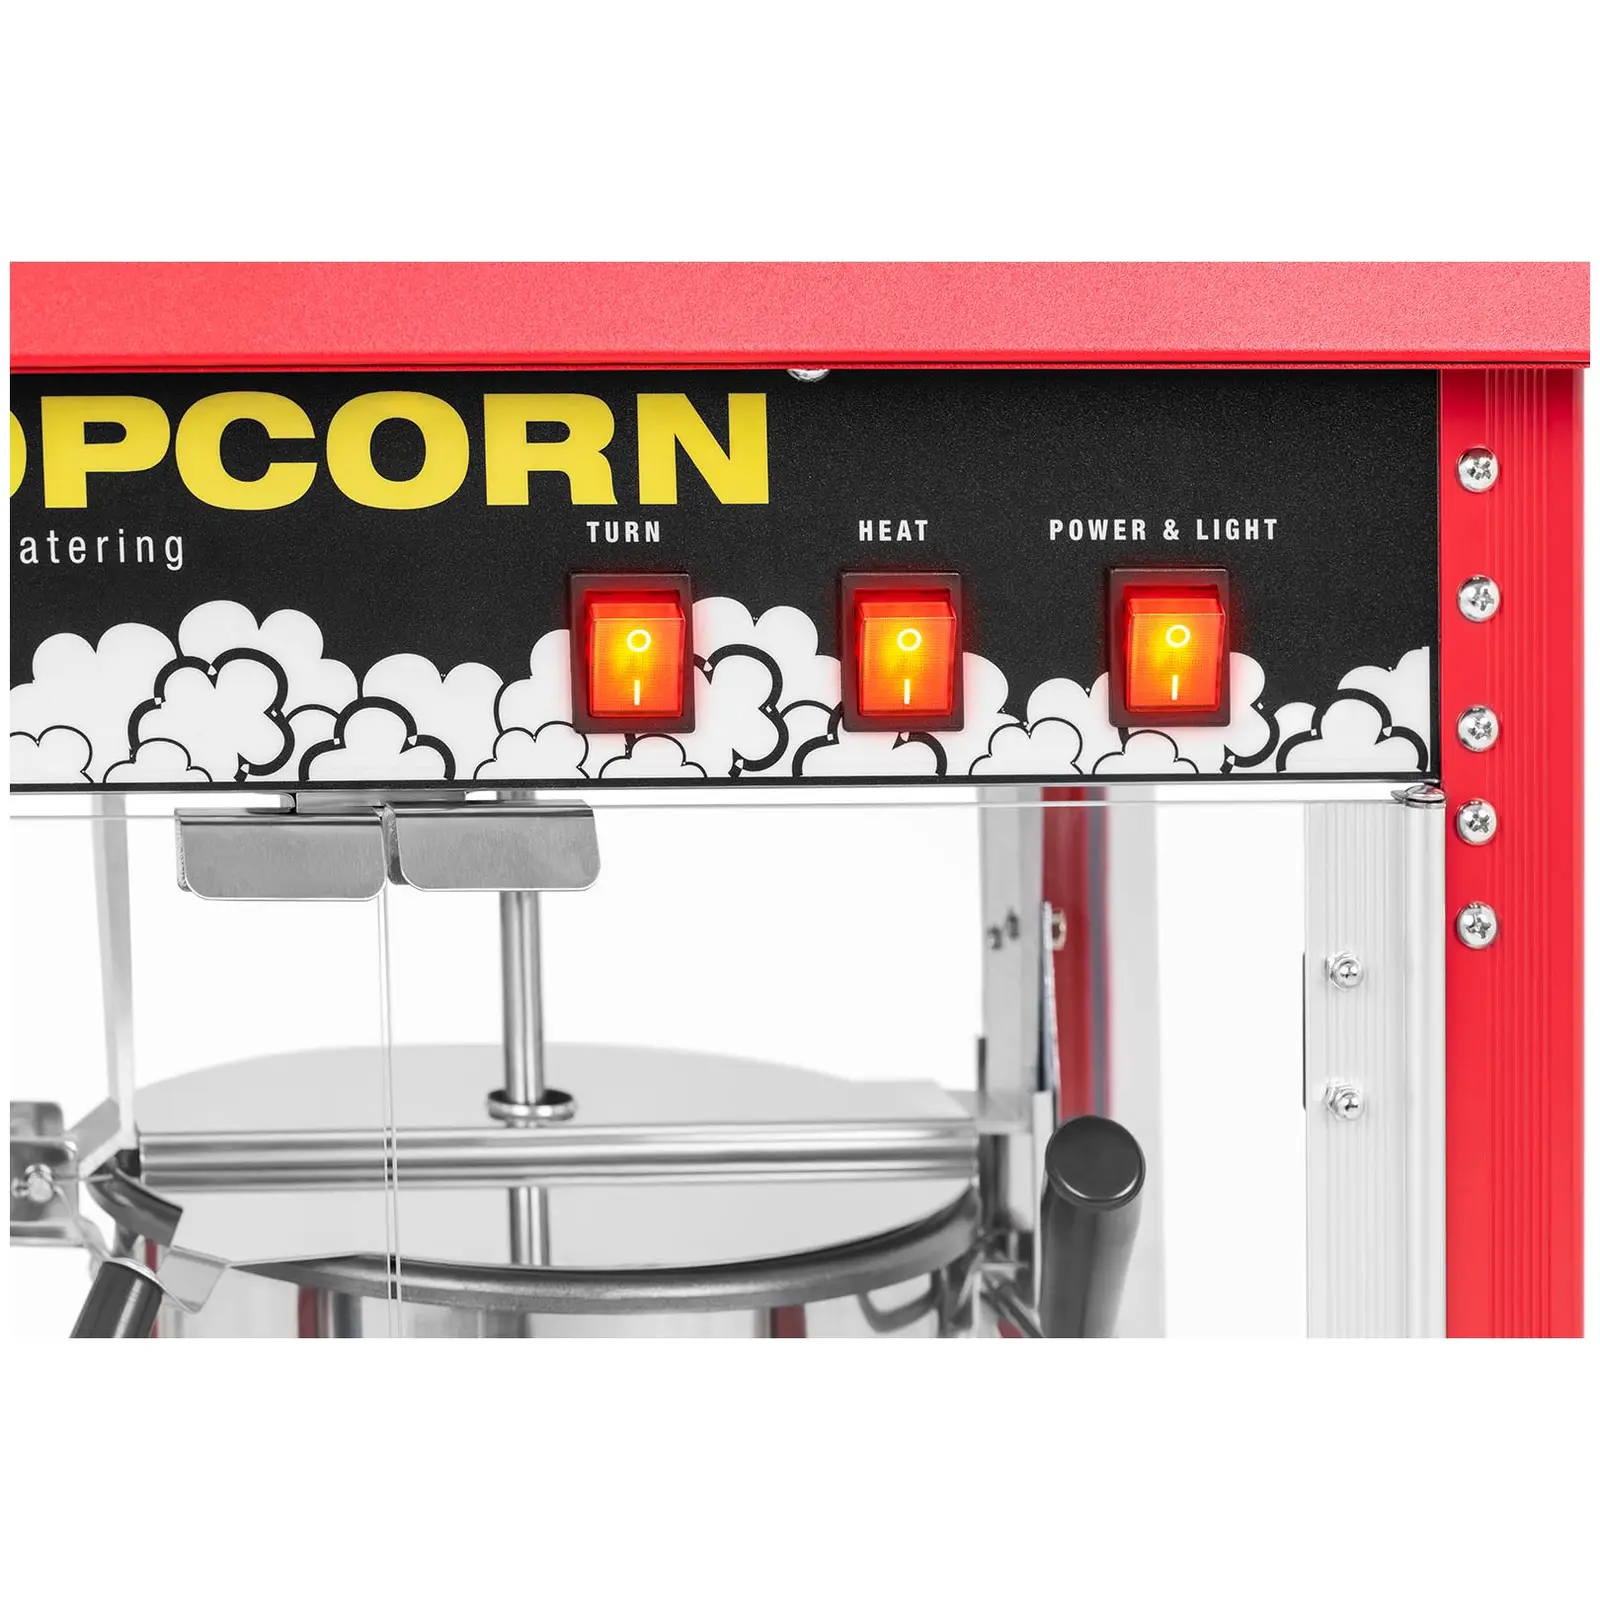 Kleine popcornmachine - 1600 W vermogen, roestvrij staal, gehard glas en teflon materiaal